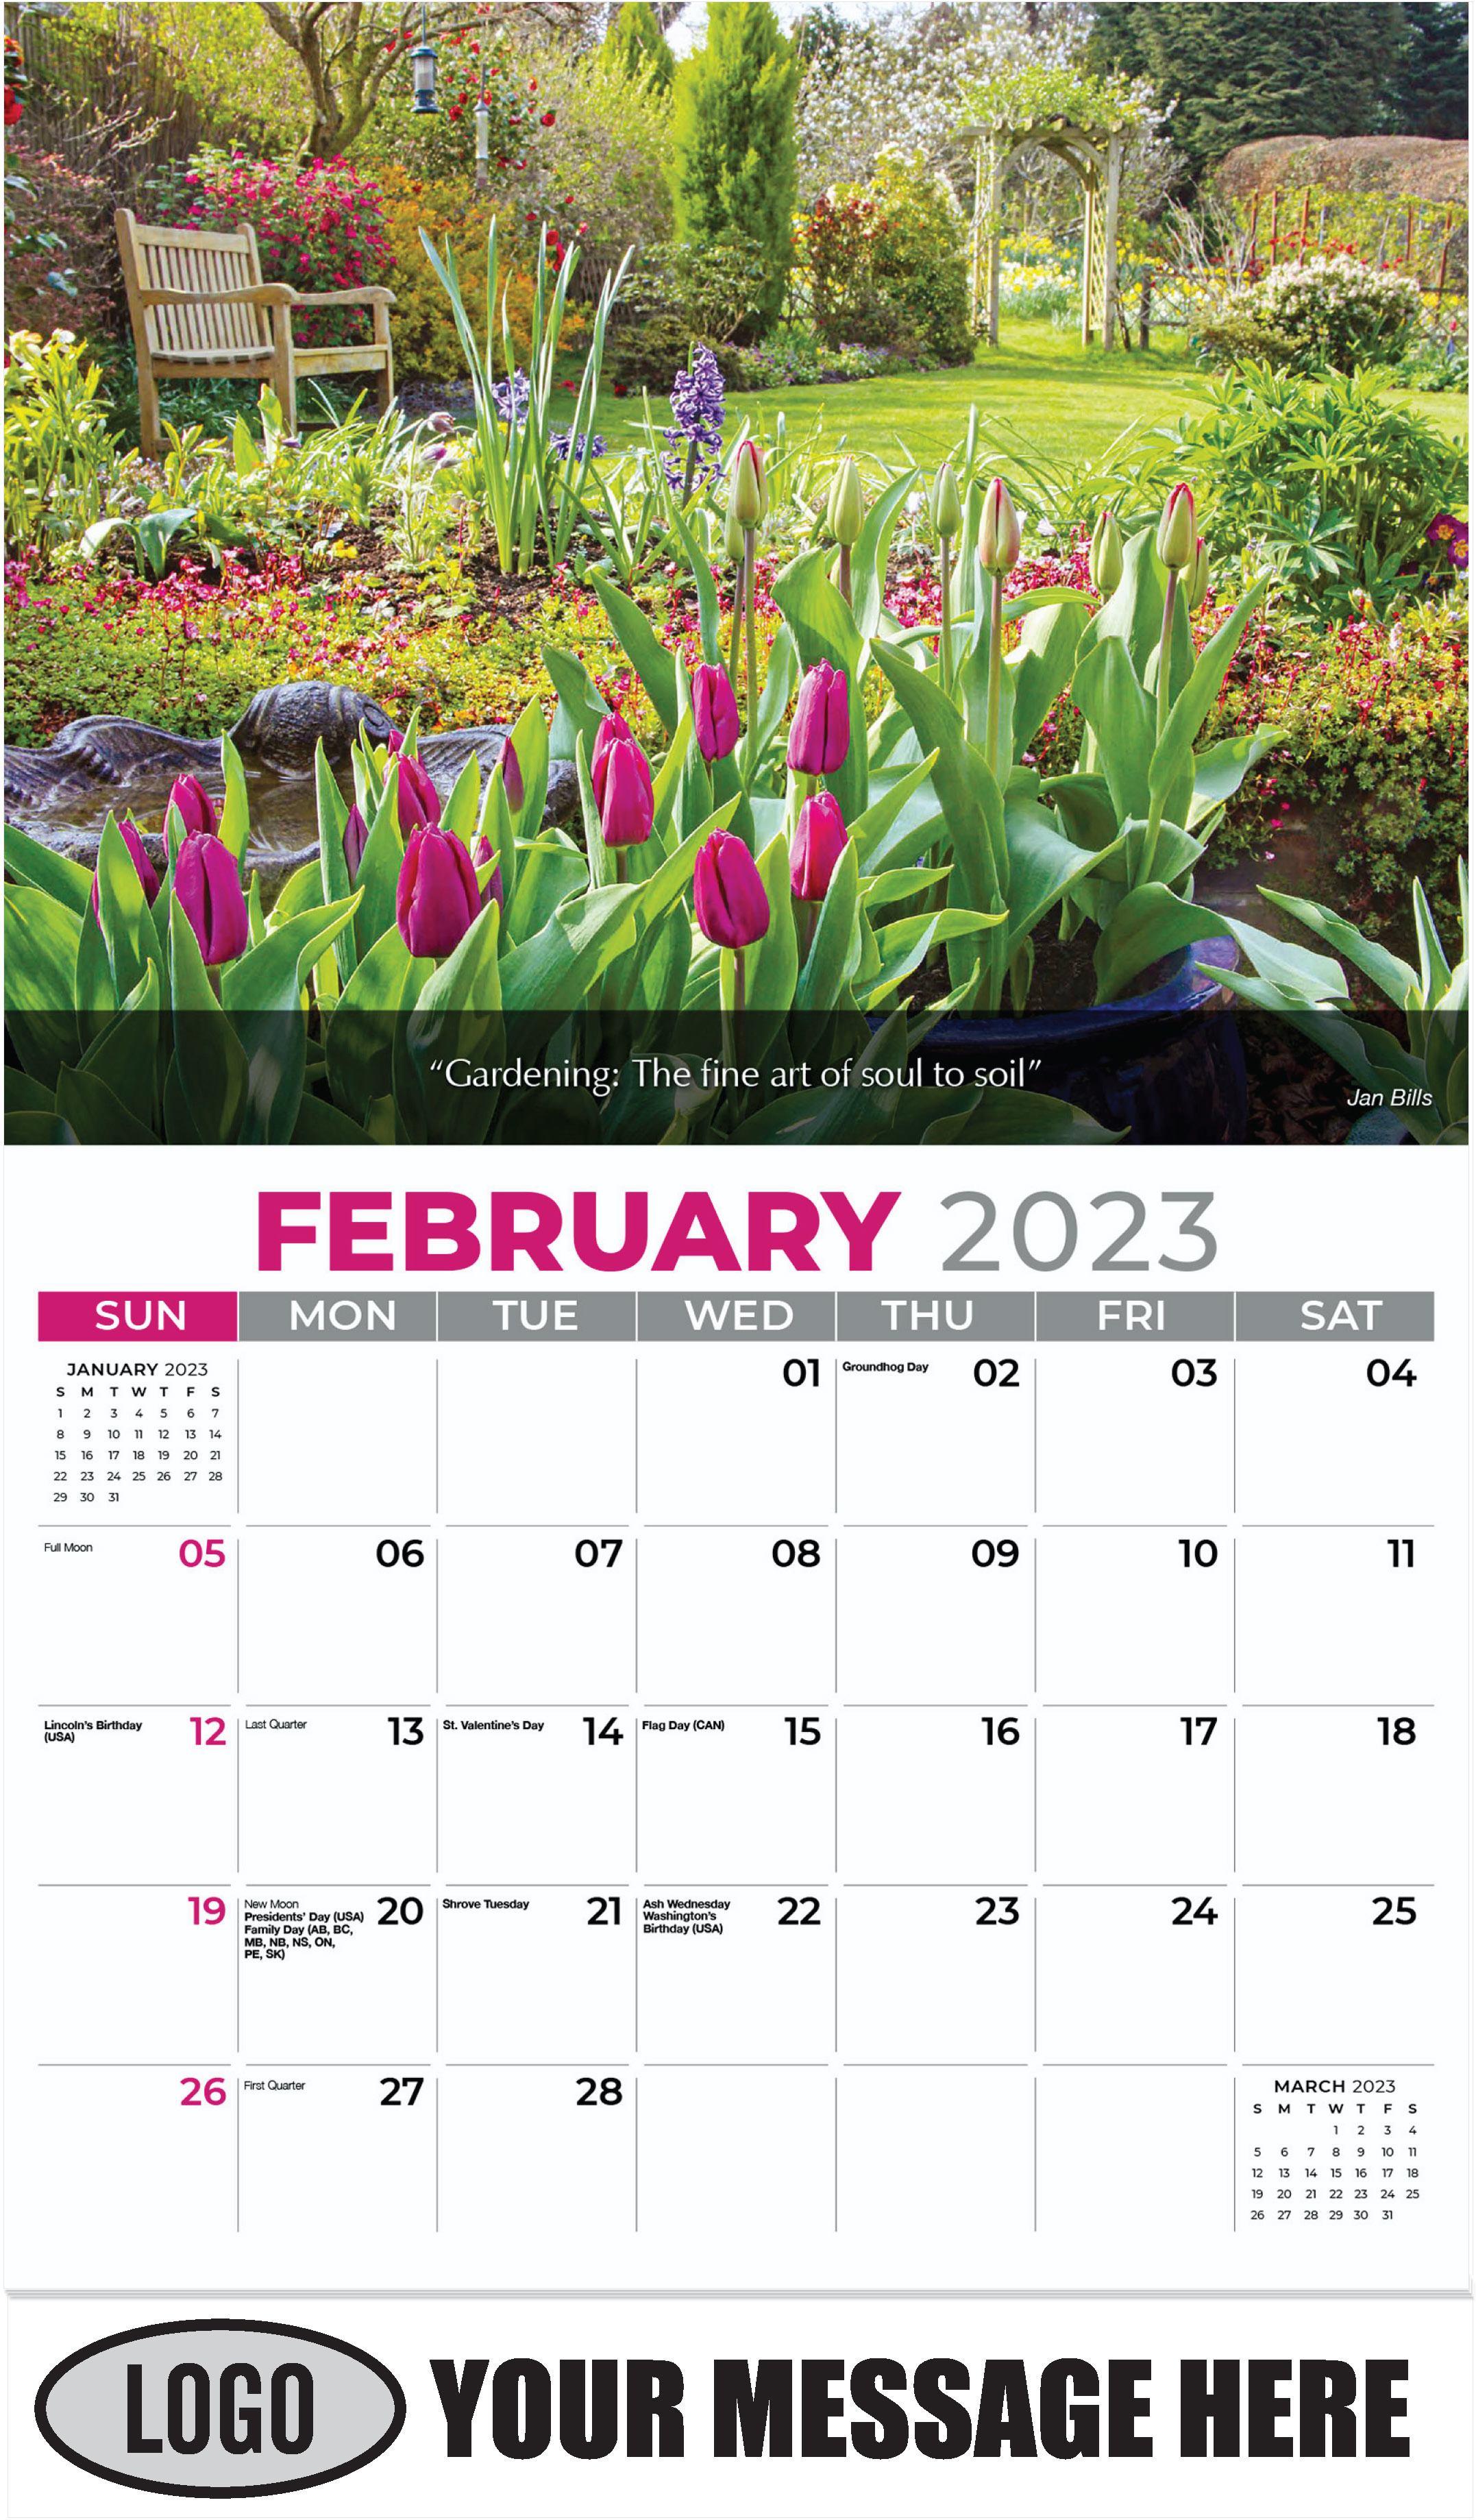 English domestic garden - February - Flowers & Gardens 2023 Promotional Calendar